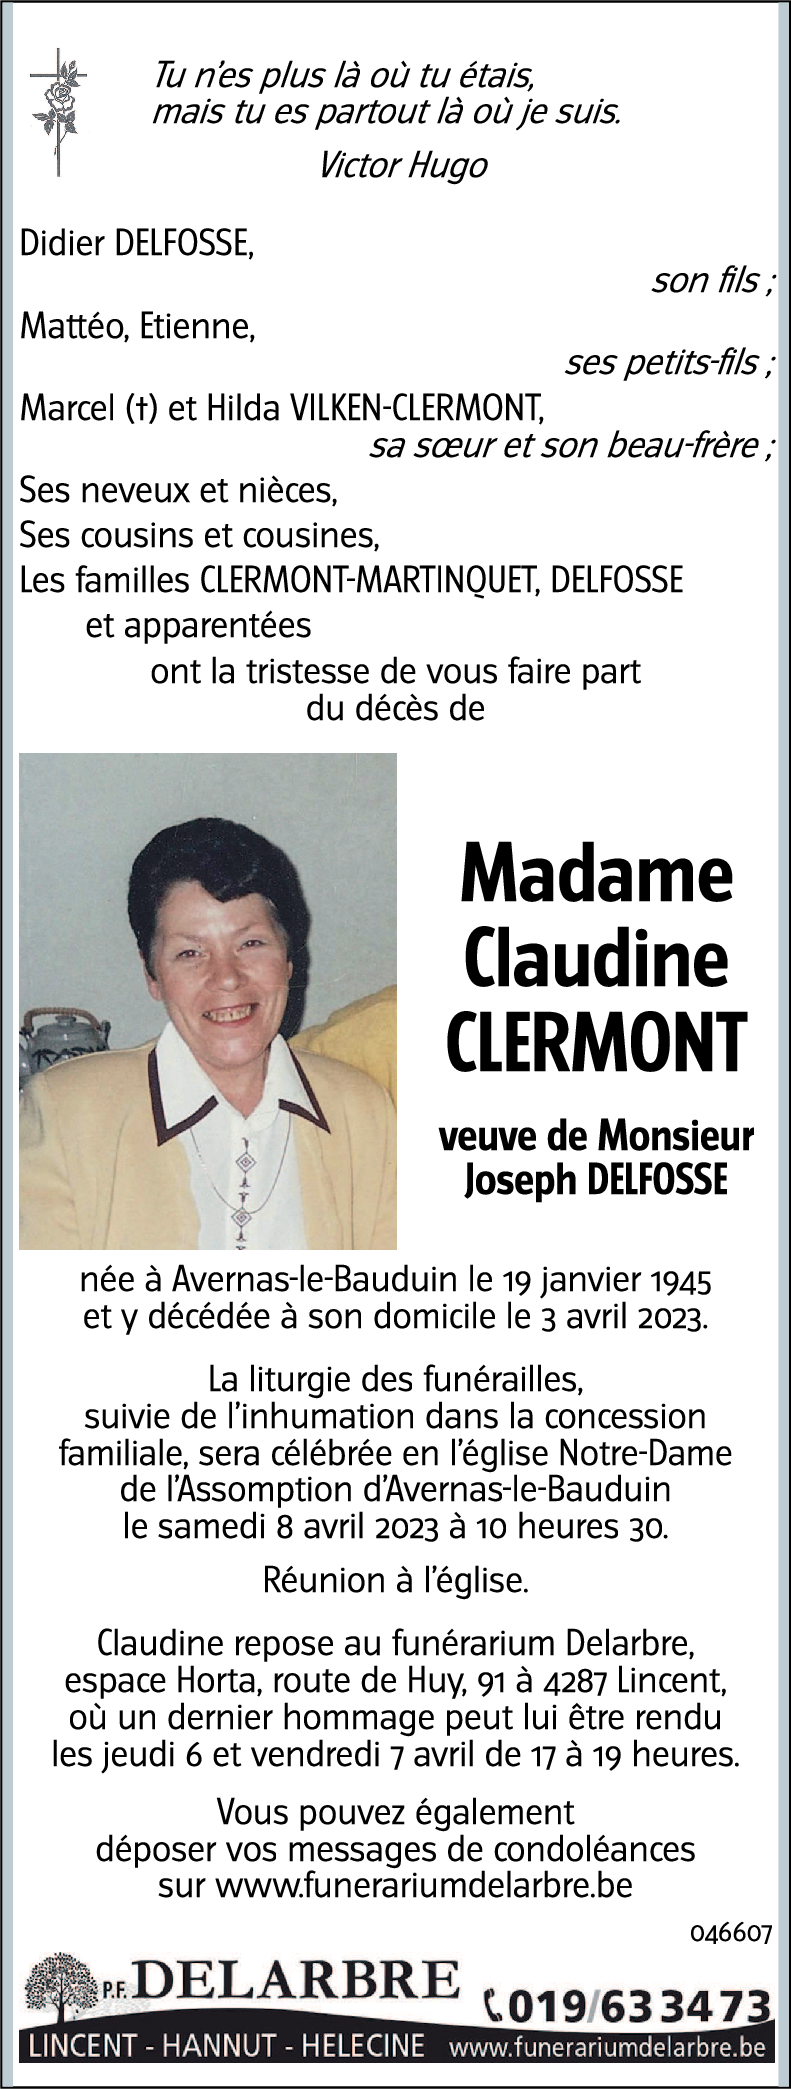 Claudine CLERMONT